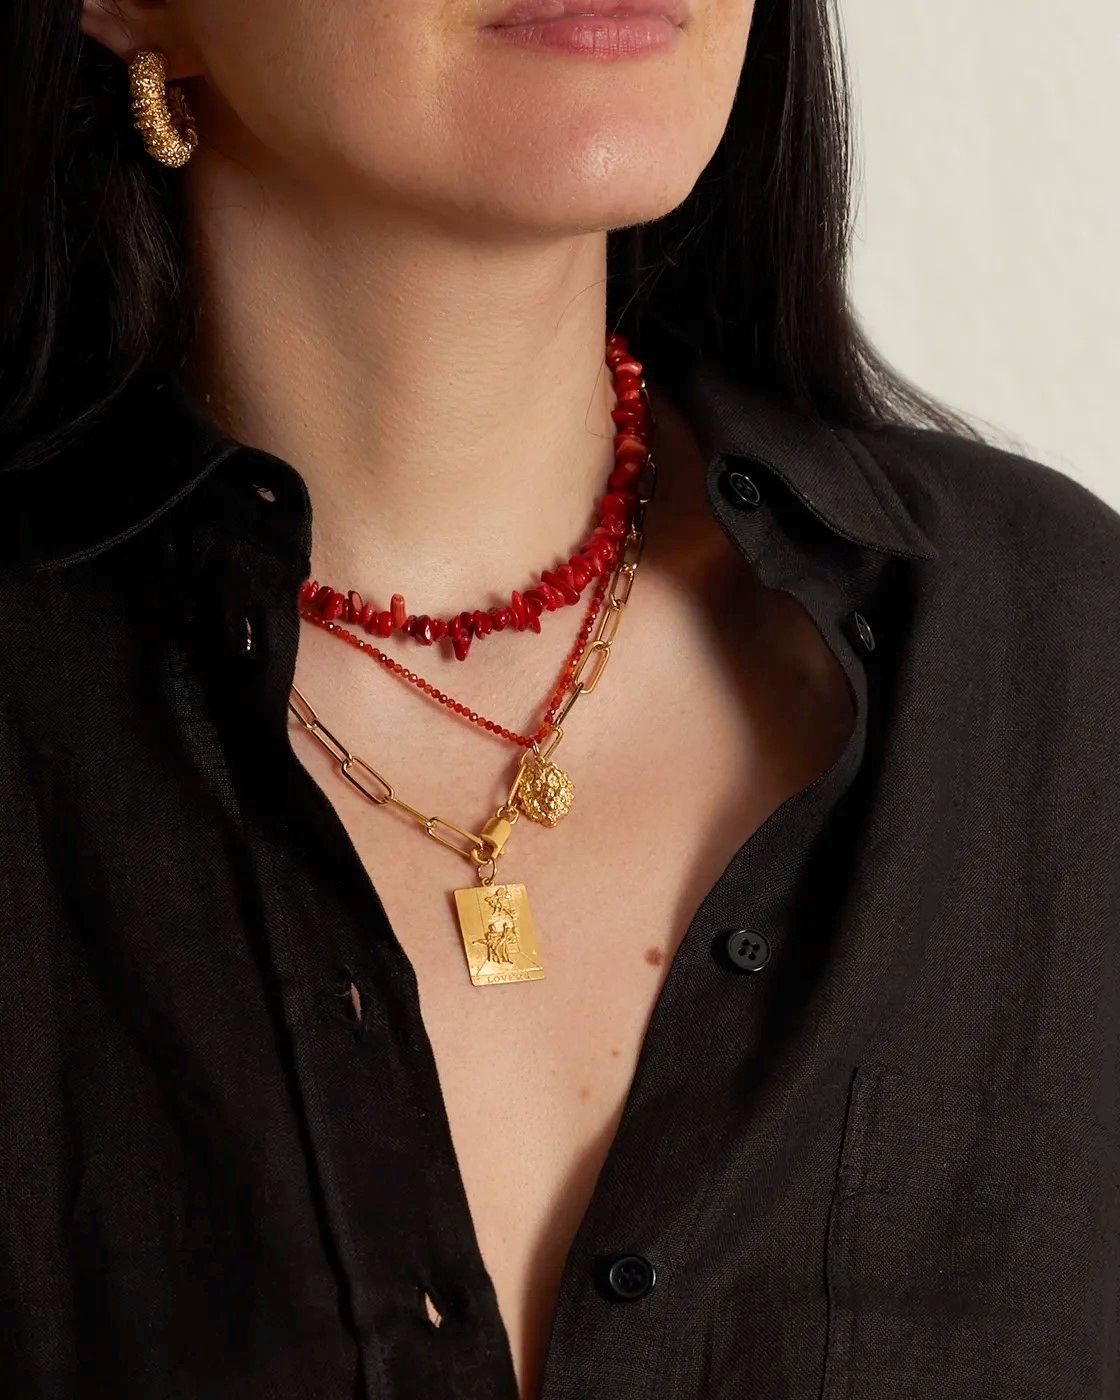 Carnelian Necklace with a Lion Pendant